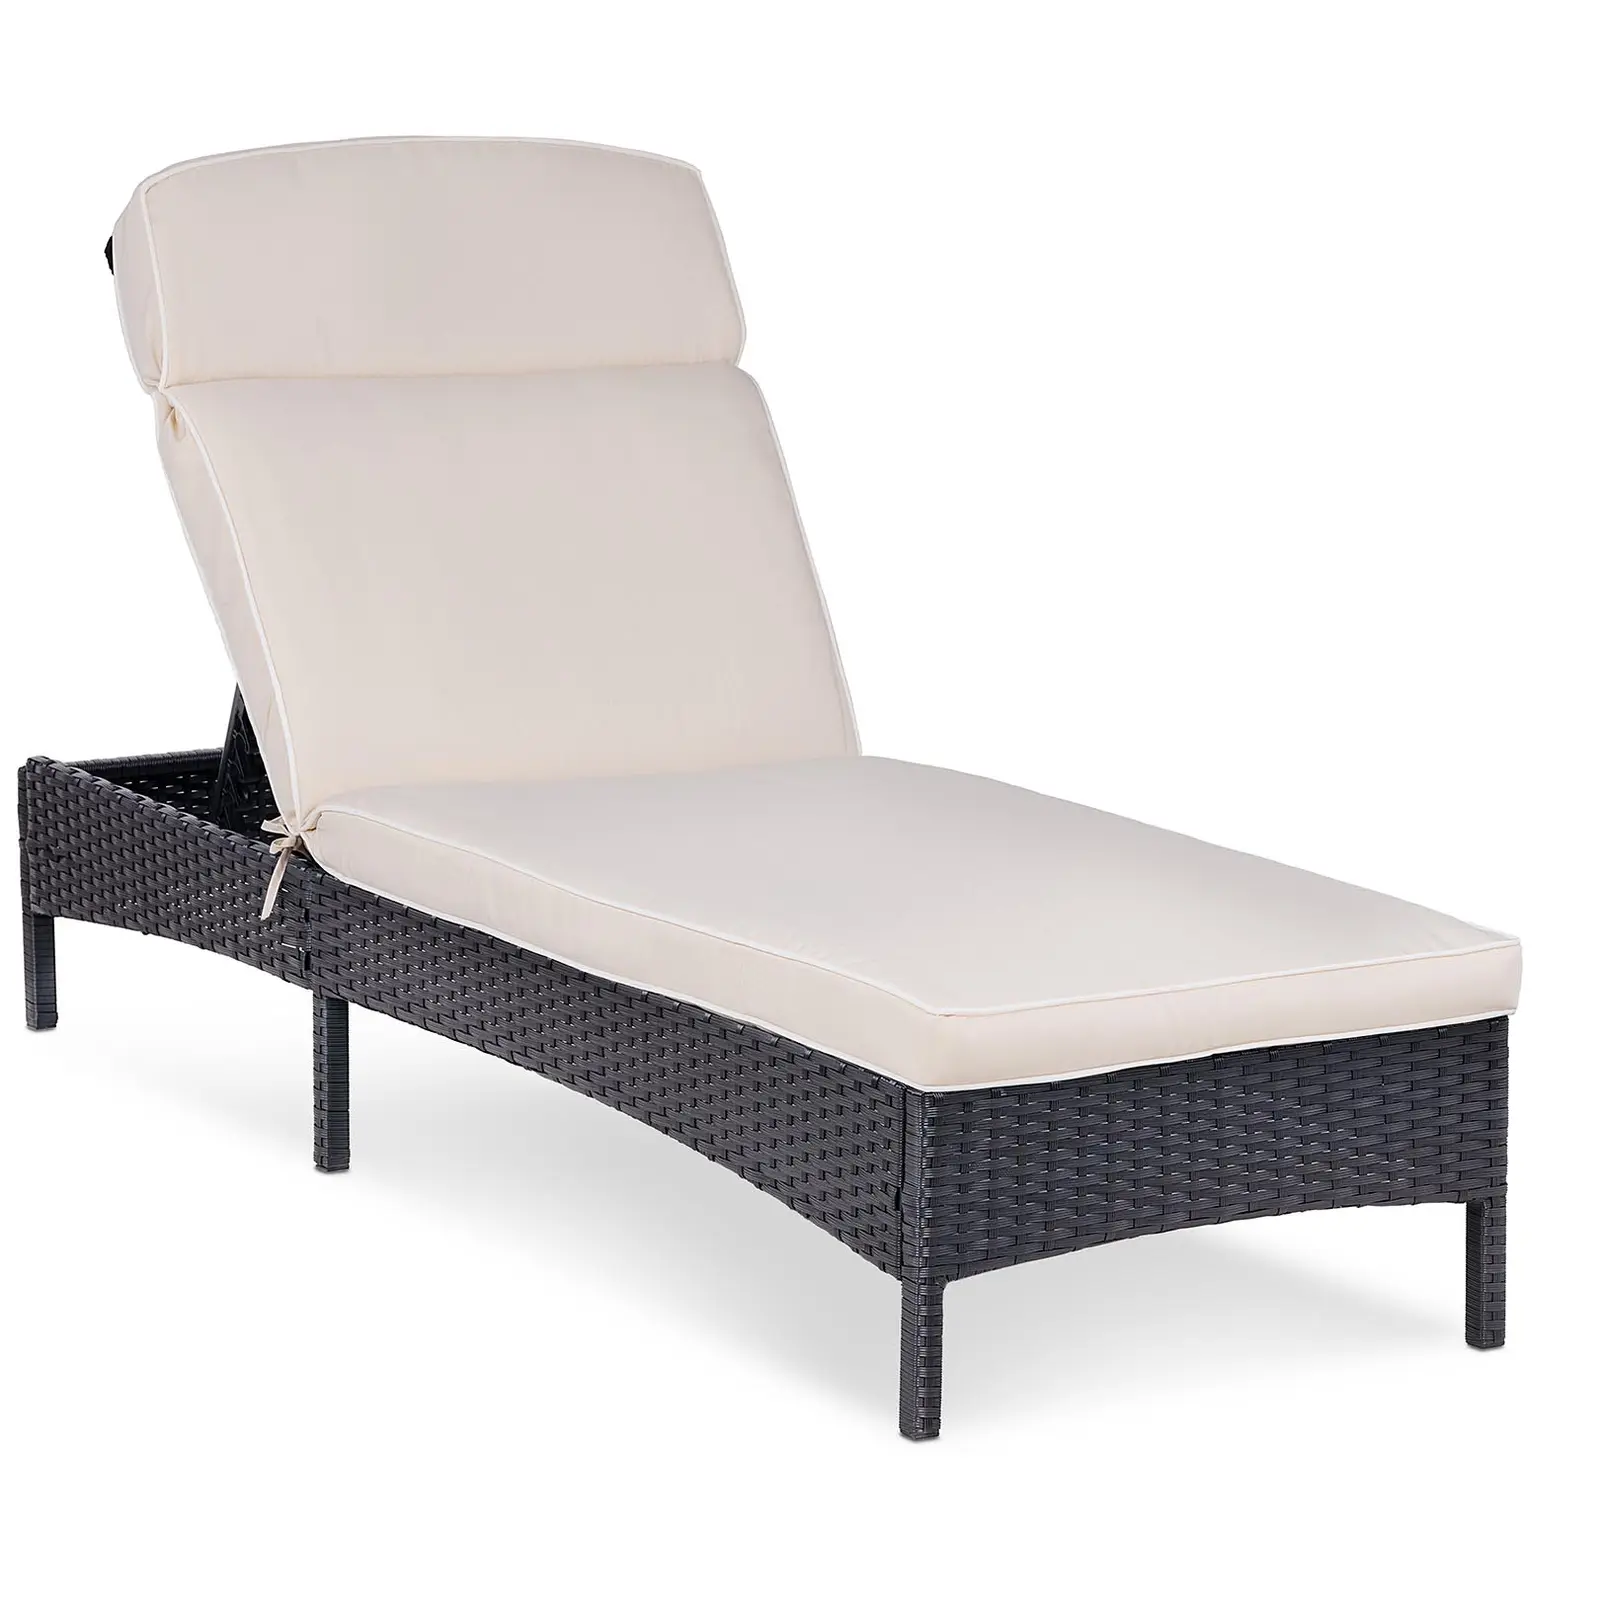 Beige rattan sun lounger - adjustable garden chair